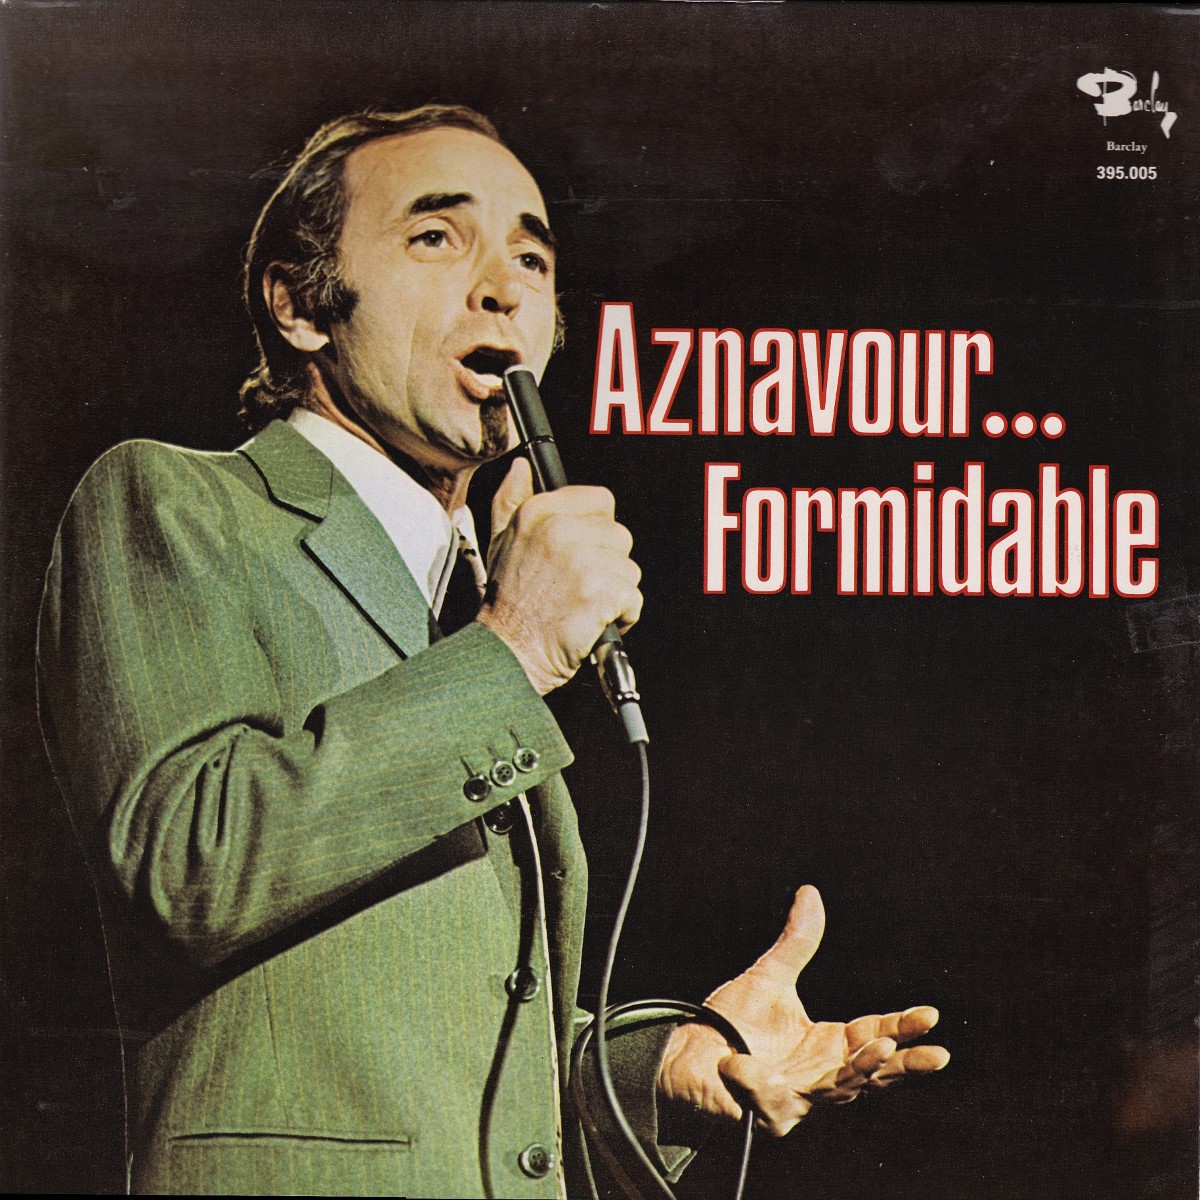 Charles Aznavour - Aznavour ... Formidable (1973)